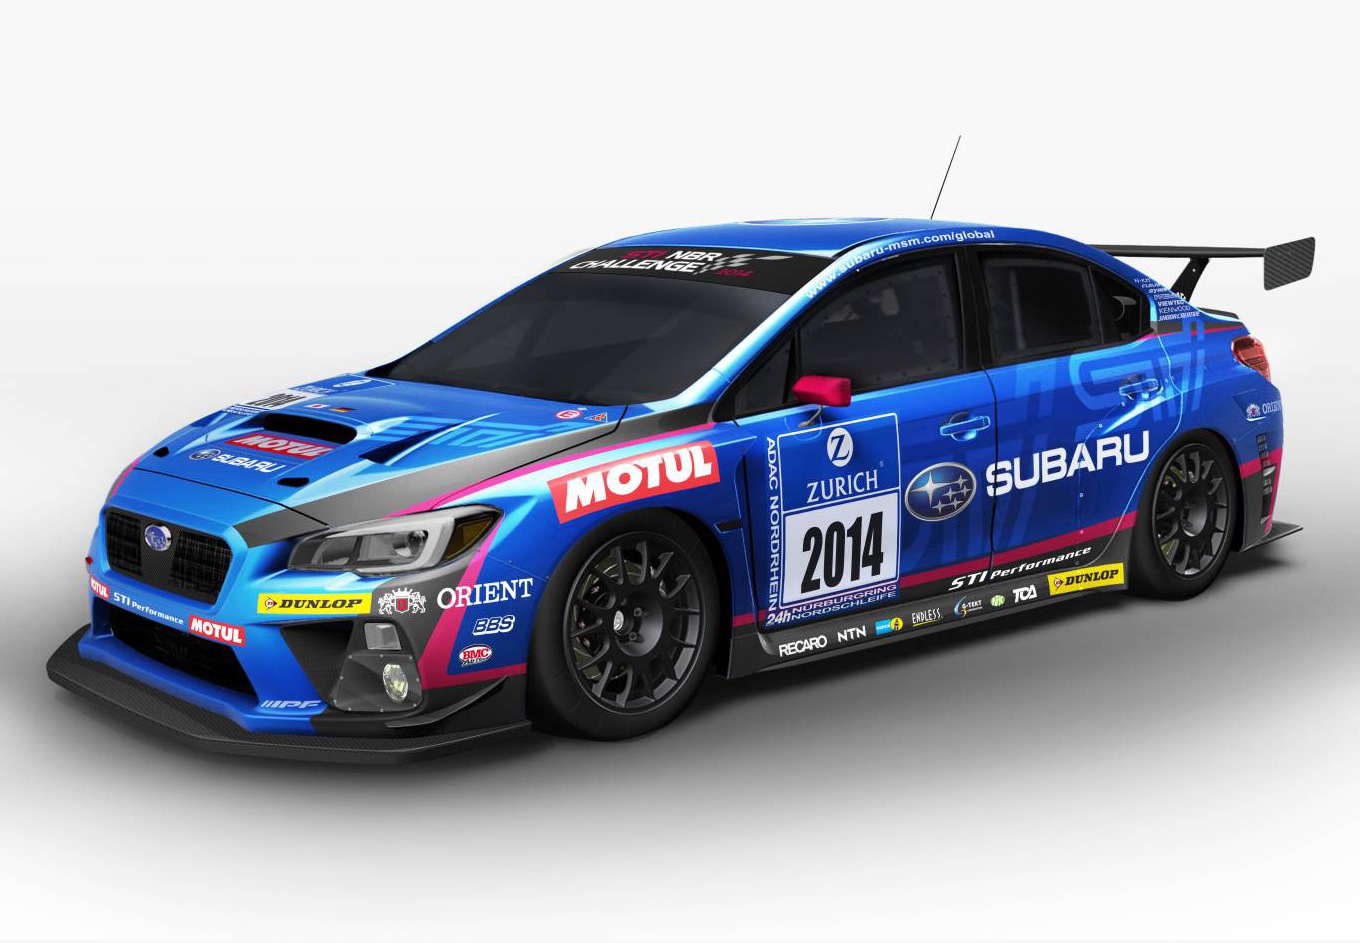 2014 Subaru WRX STI Nurburgring 24hr racer revealed